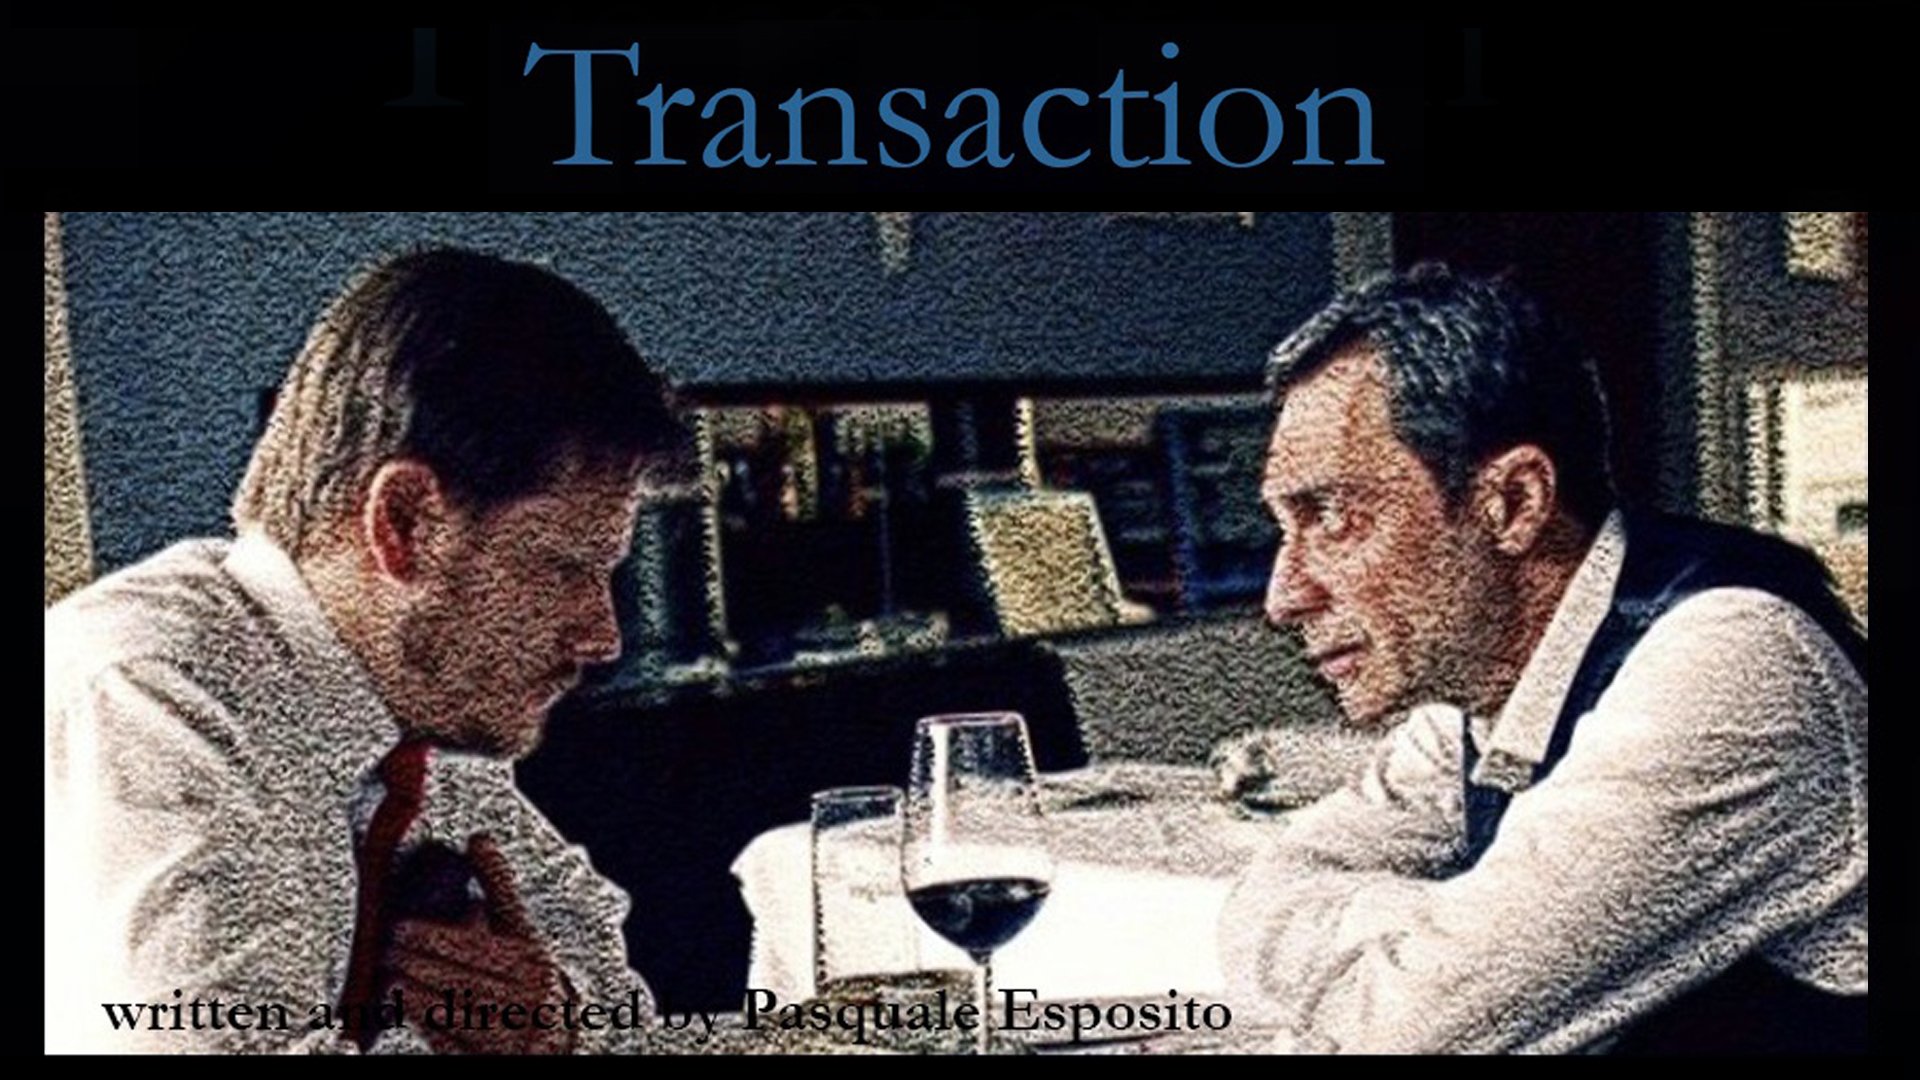 The Transaction